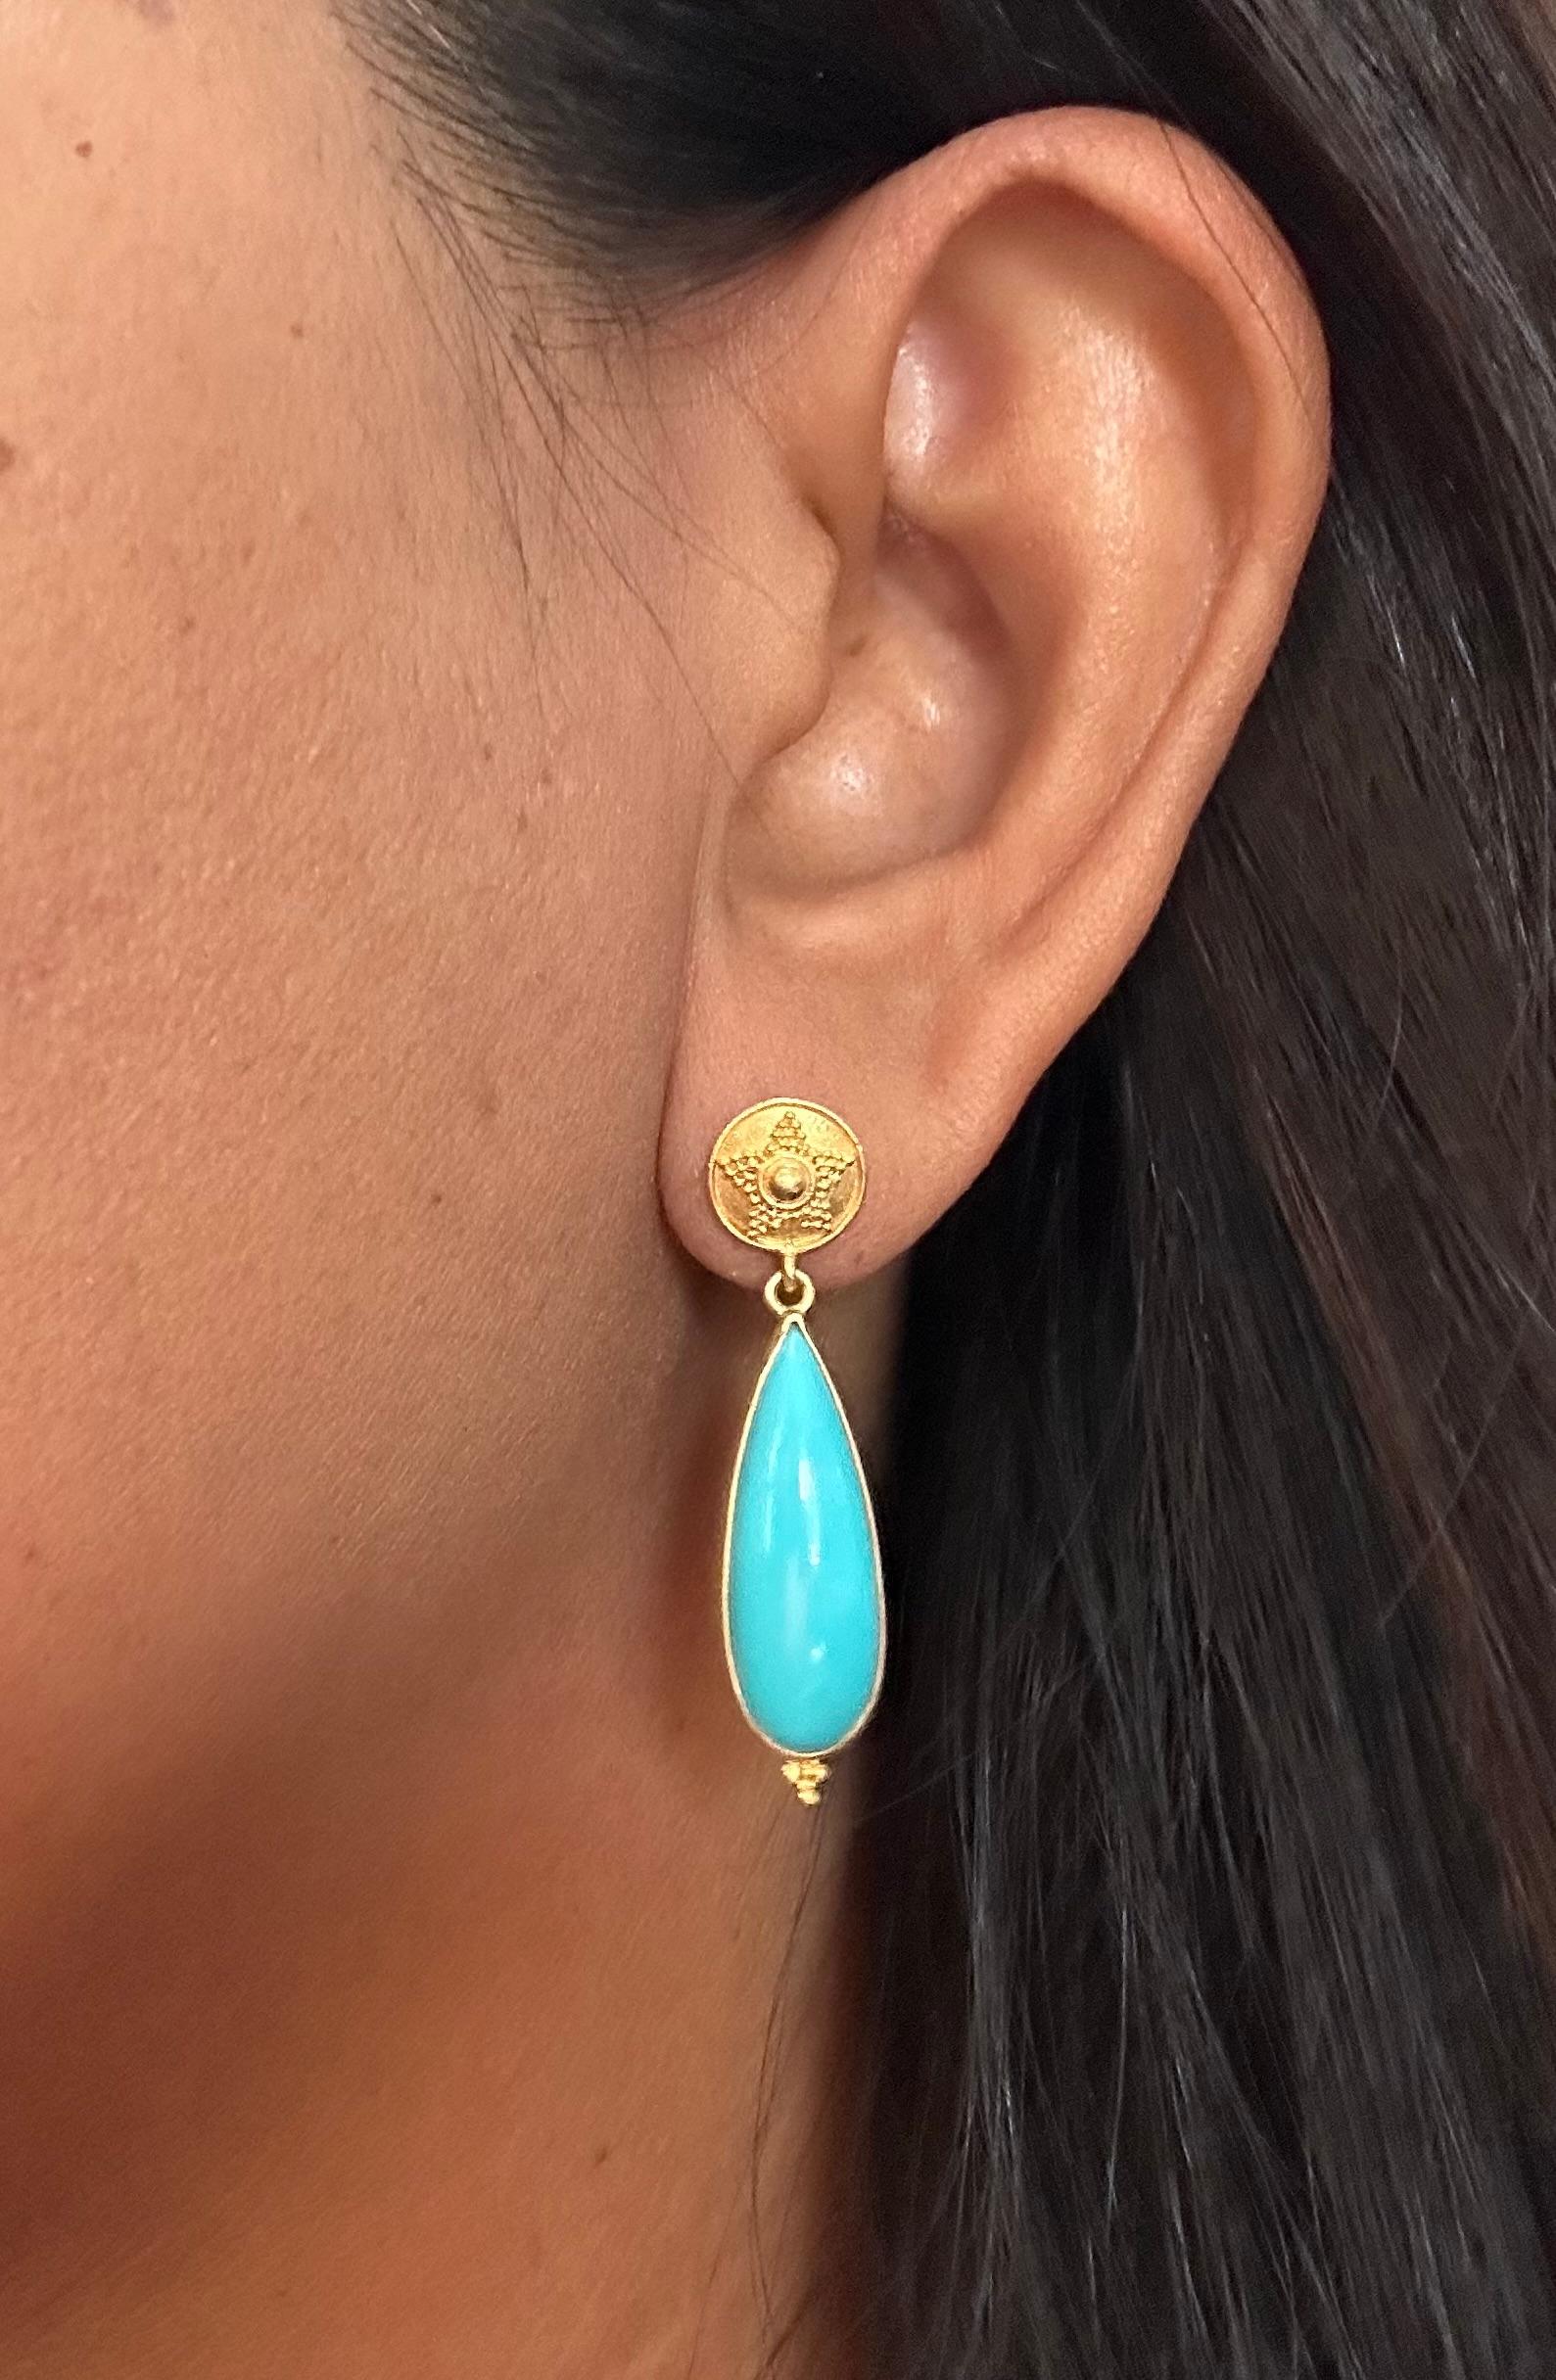 Steven Battelle 12.4 Carats Sleeping Beauty Turquoise 18K Gold Post Earrings For Sale 2